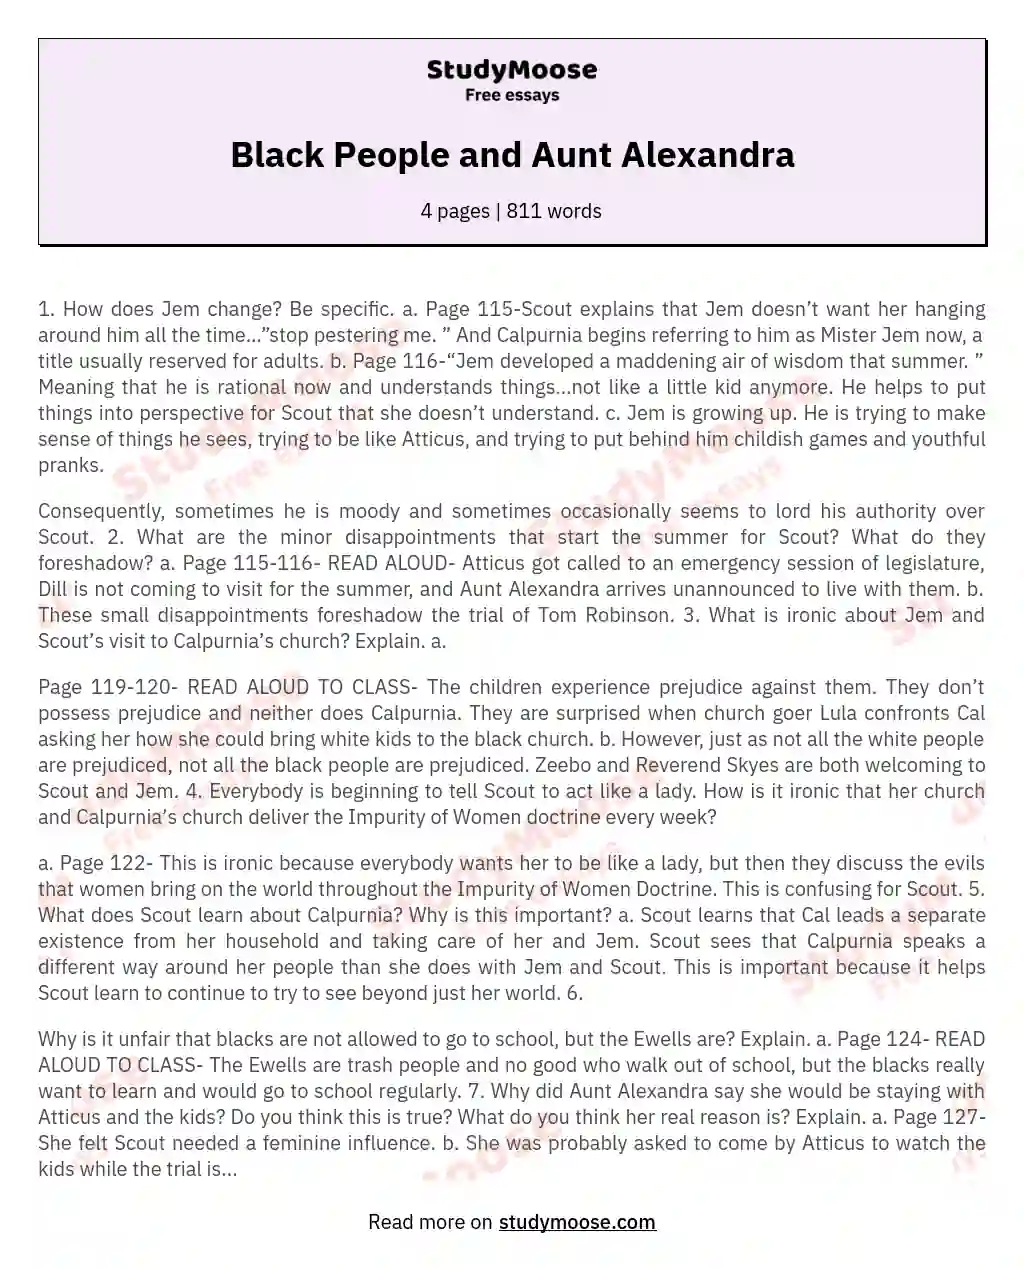 Black People and Aunt Alexandra essay